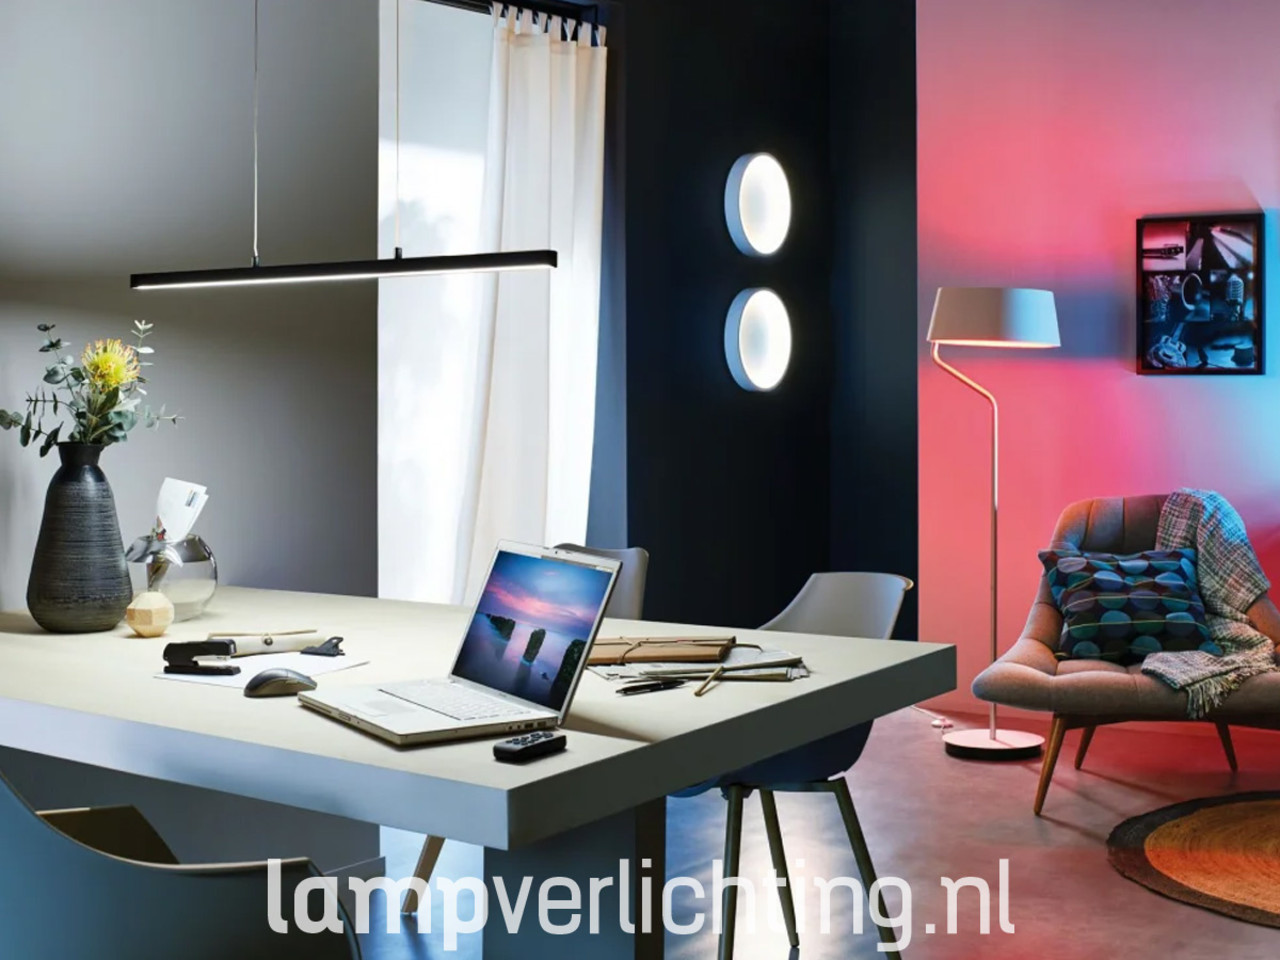 LED Hanglamp Bureau 100 cm Instelbare lichtkleur - Bluetooth sturing - LampVerlichting.nl